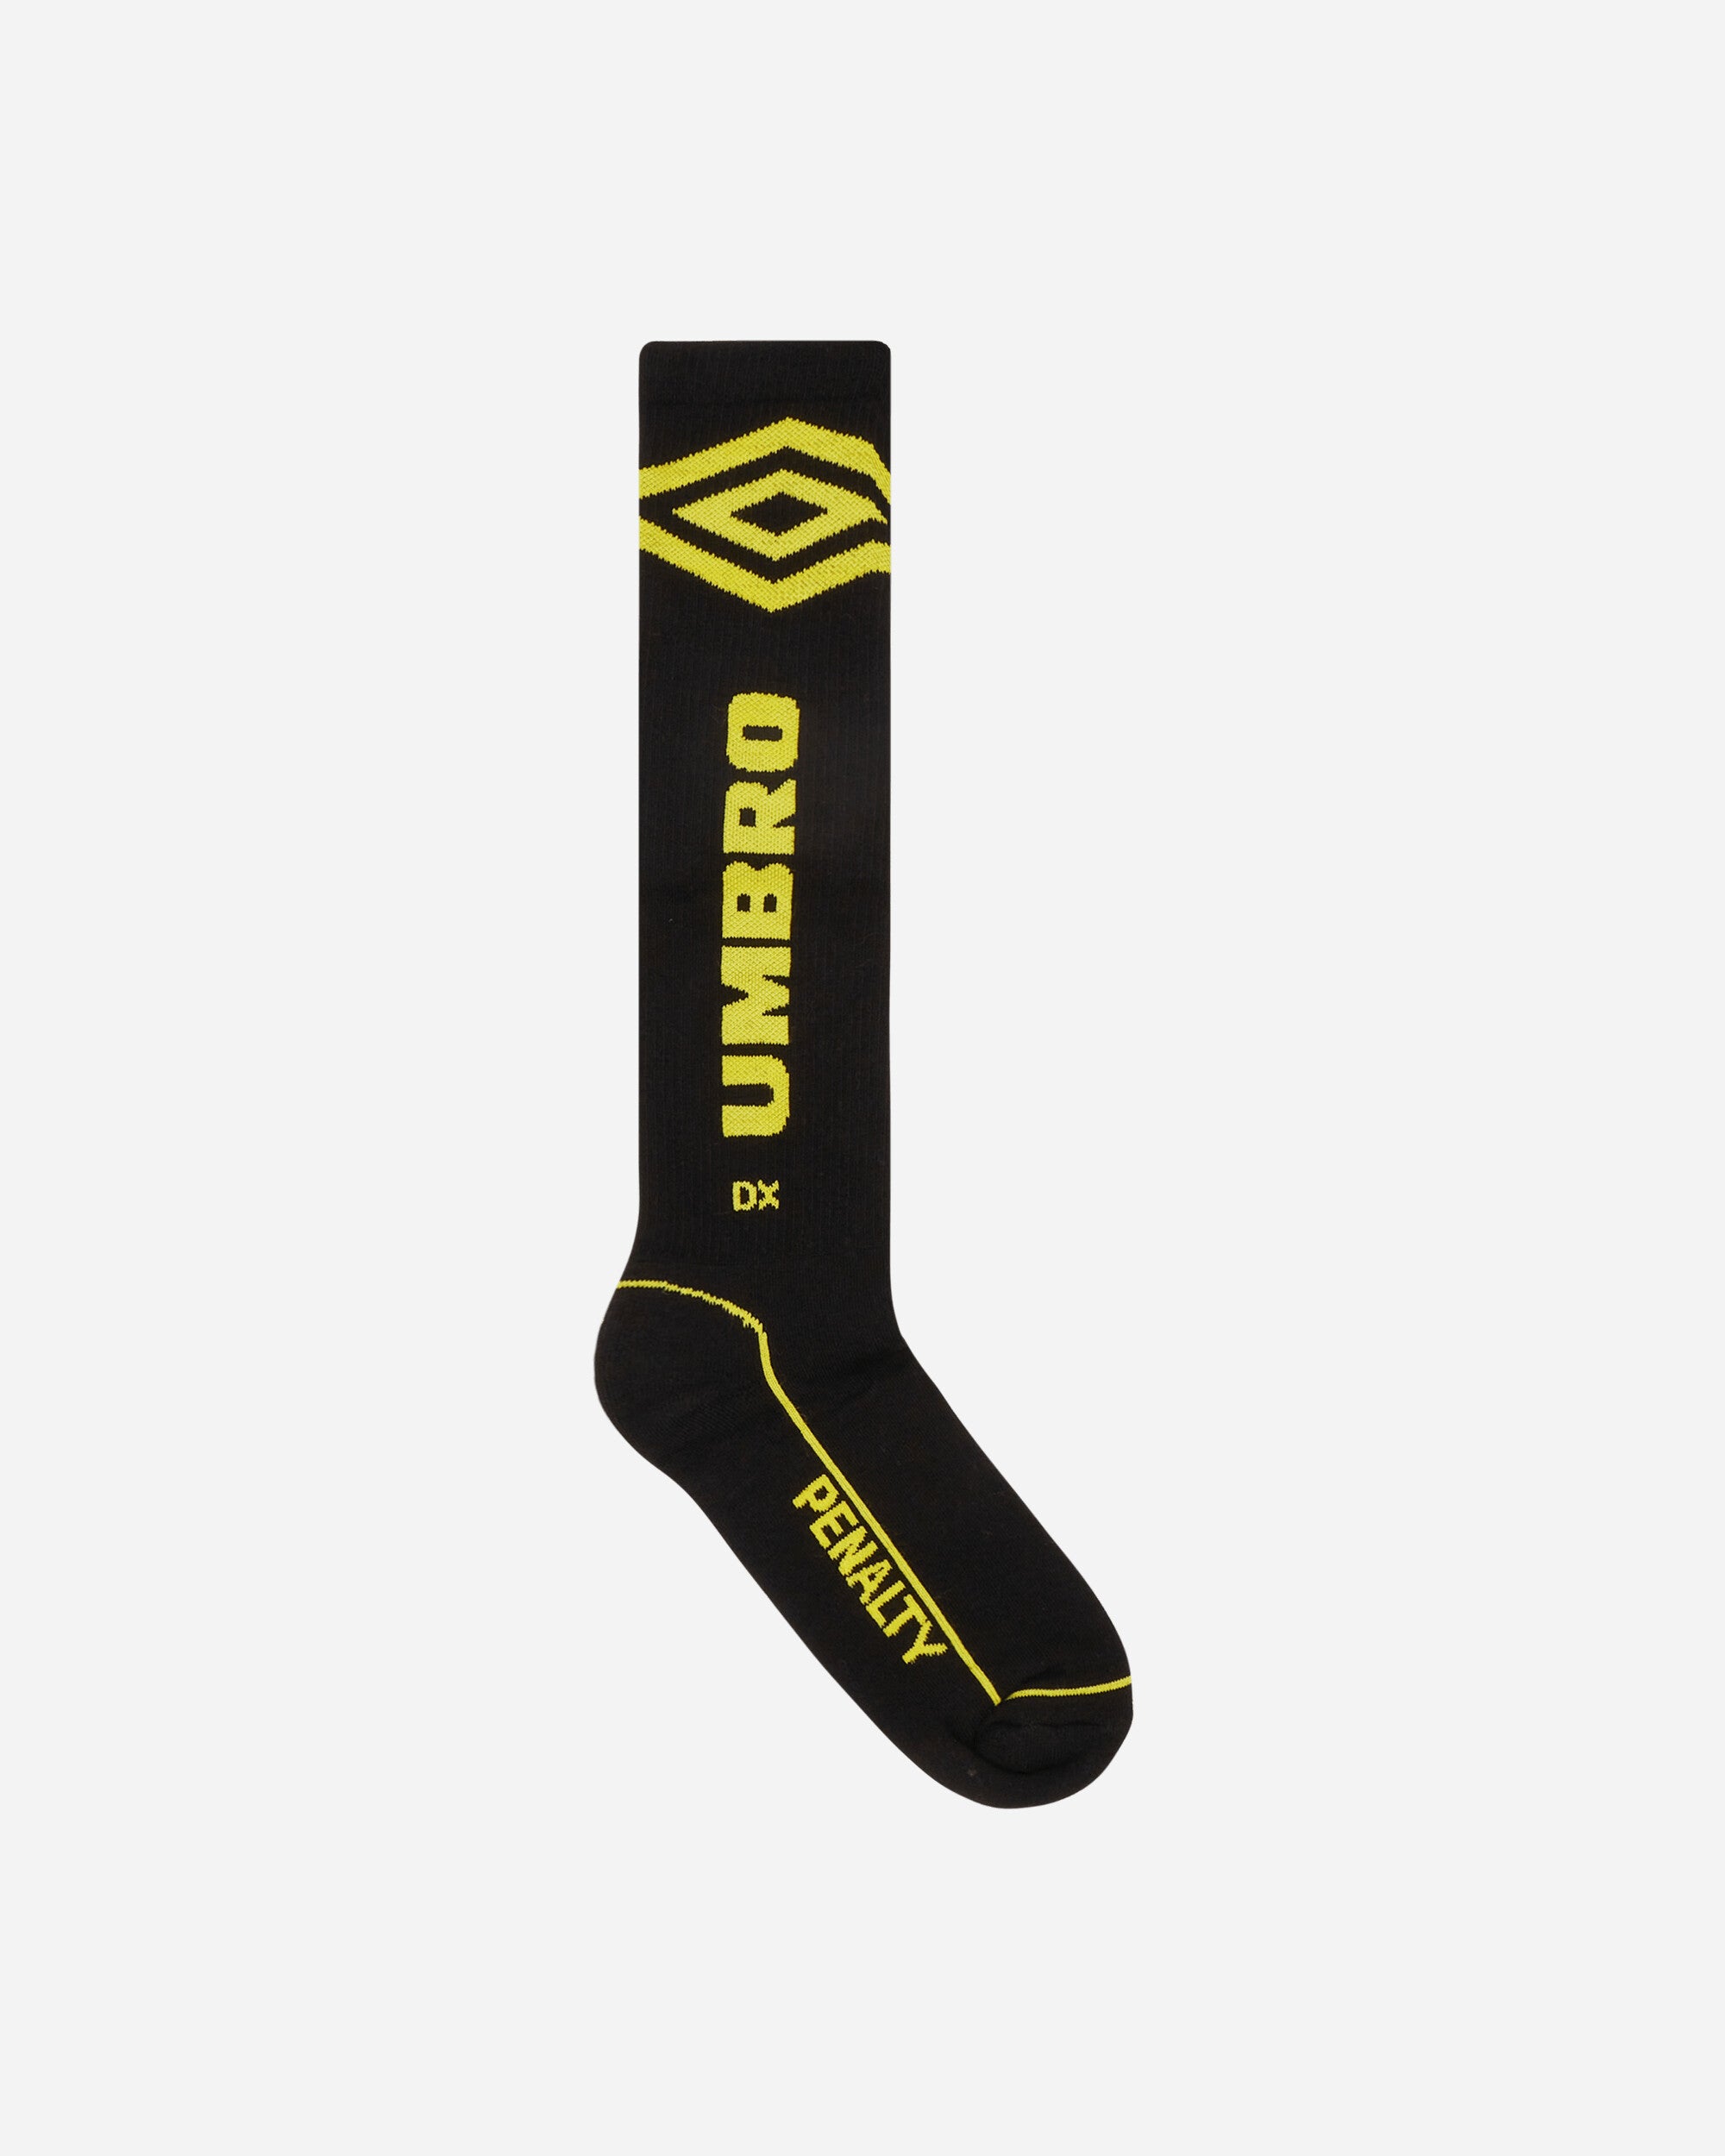 Long Socks Black Black / Yellow